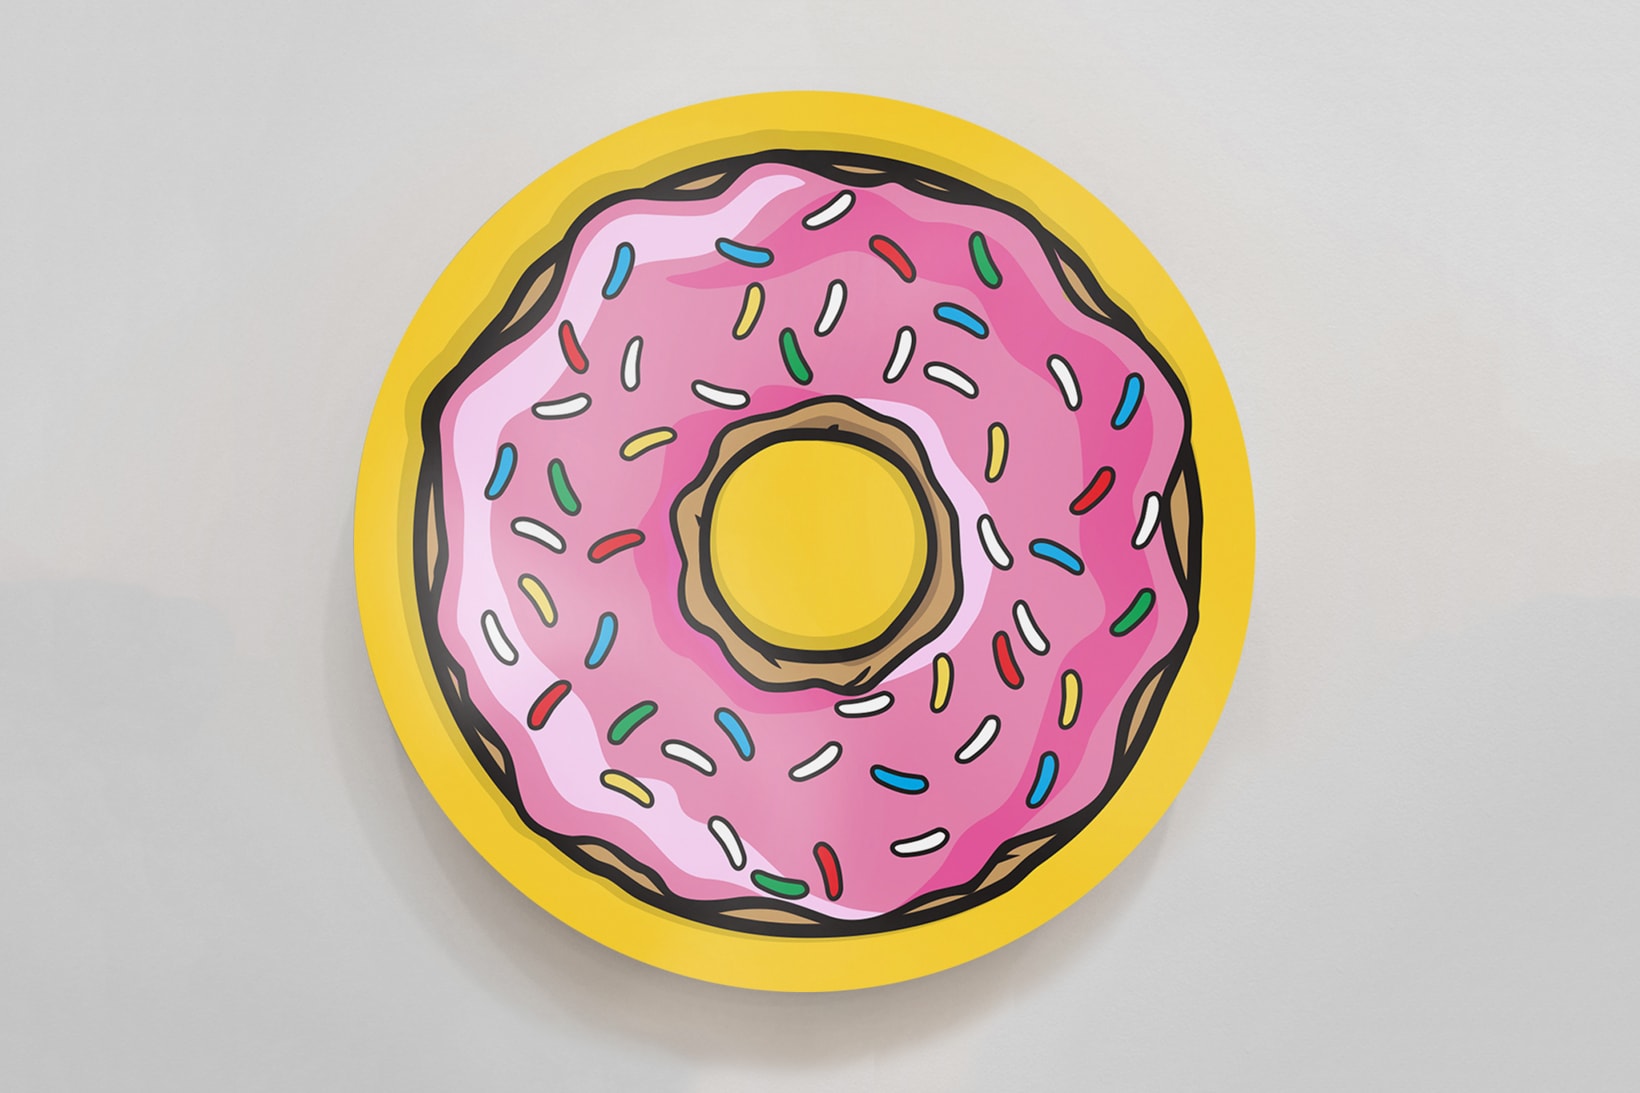 Jerkface Donuts Exhibit Art Show Pop-up Mickey Mouse Spongebob Squarepants Marvin the Martian Artwork Gallery